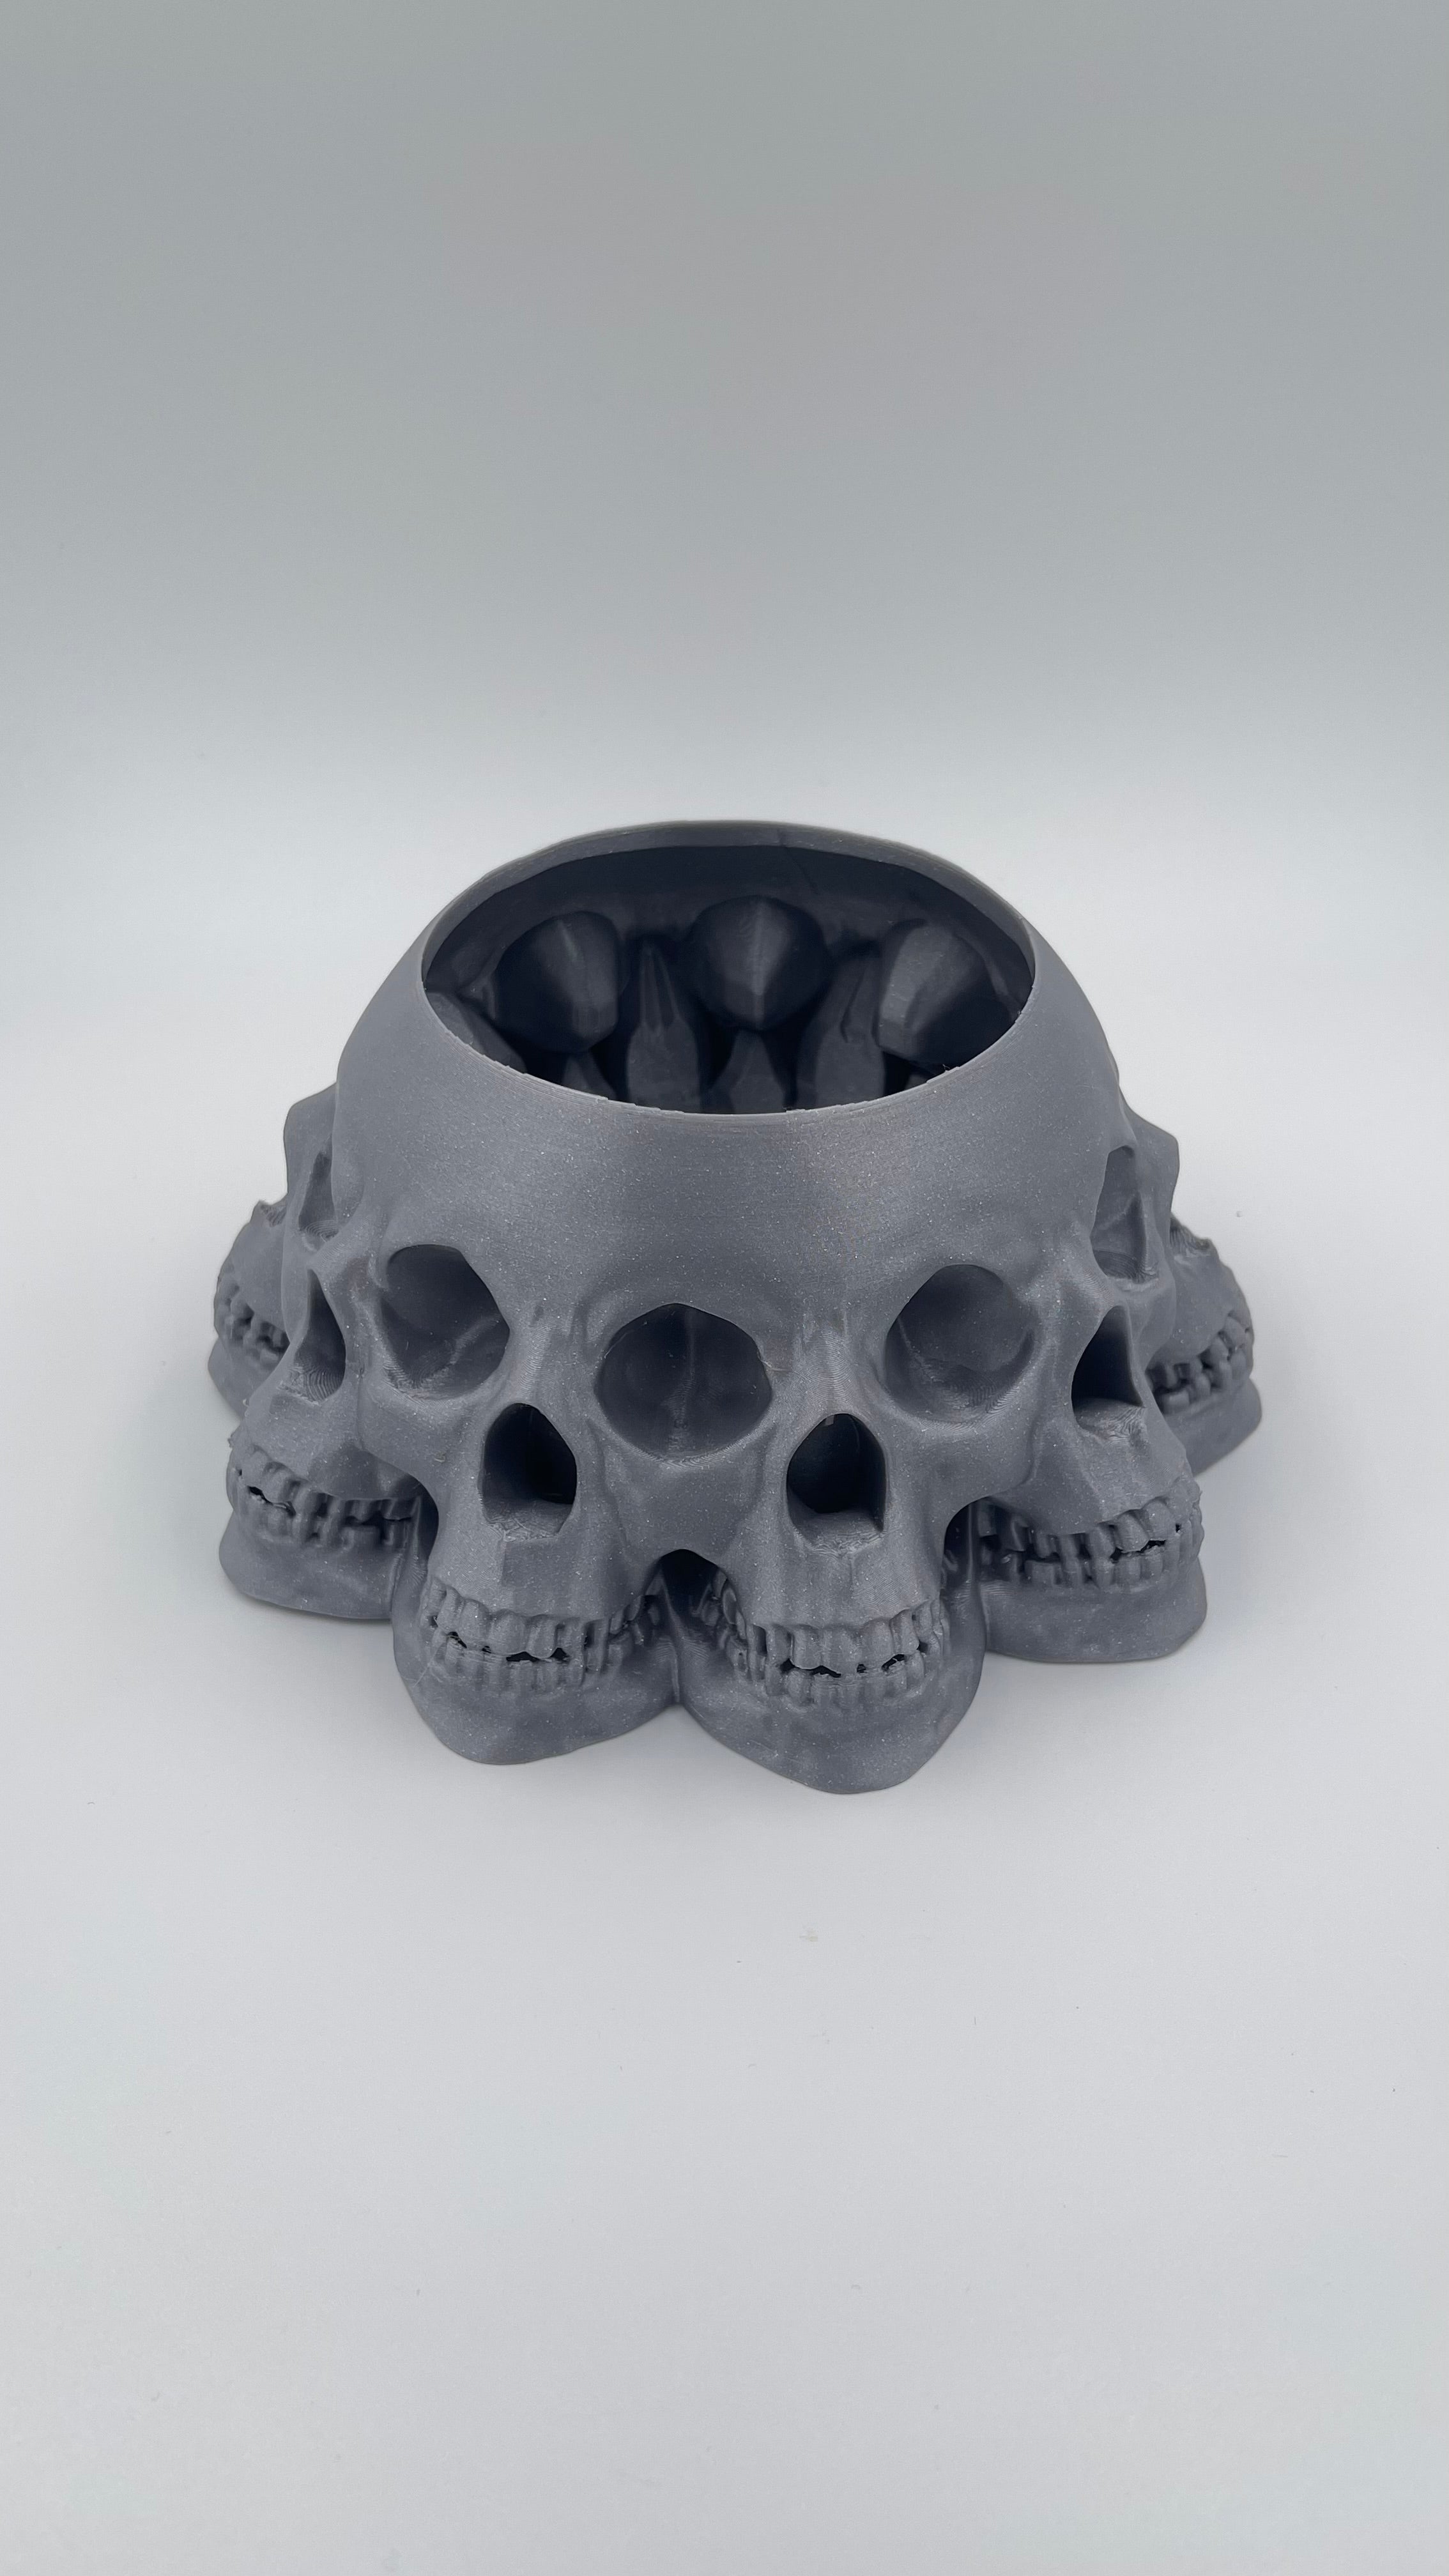 Gothic Skull Bowl/Planter - Multi-Skull Design for Darkly Stylish Decor - Unique Halloween Centerpiece